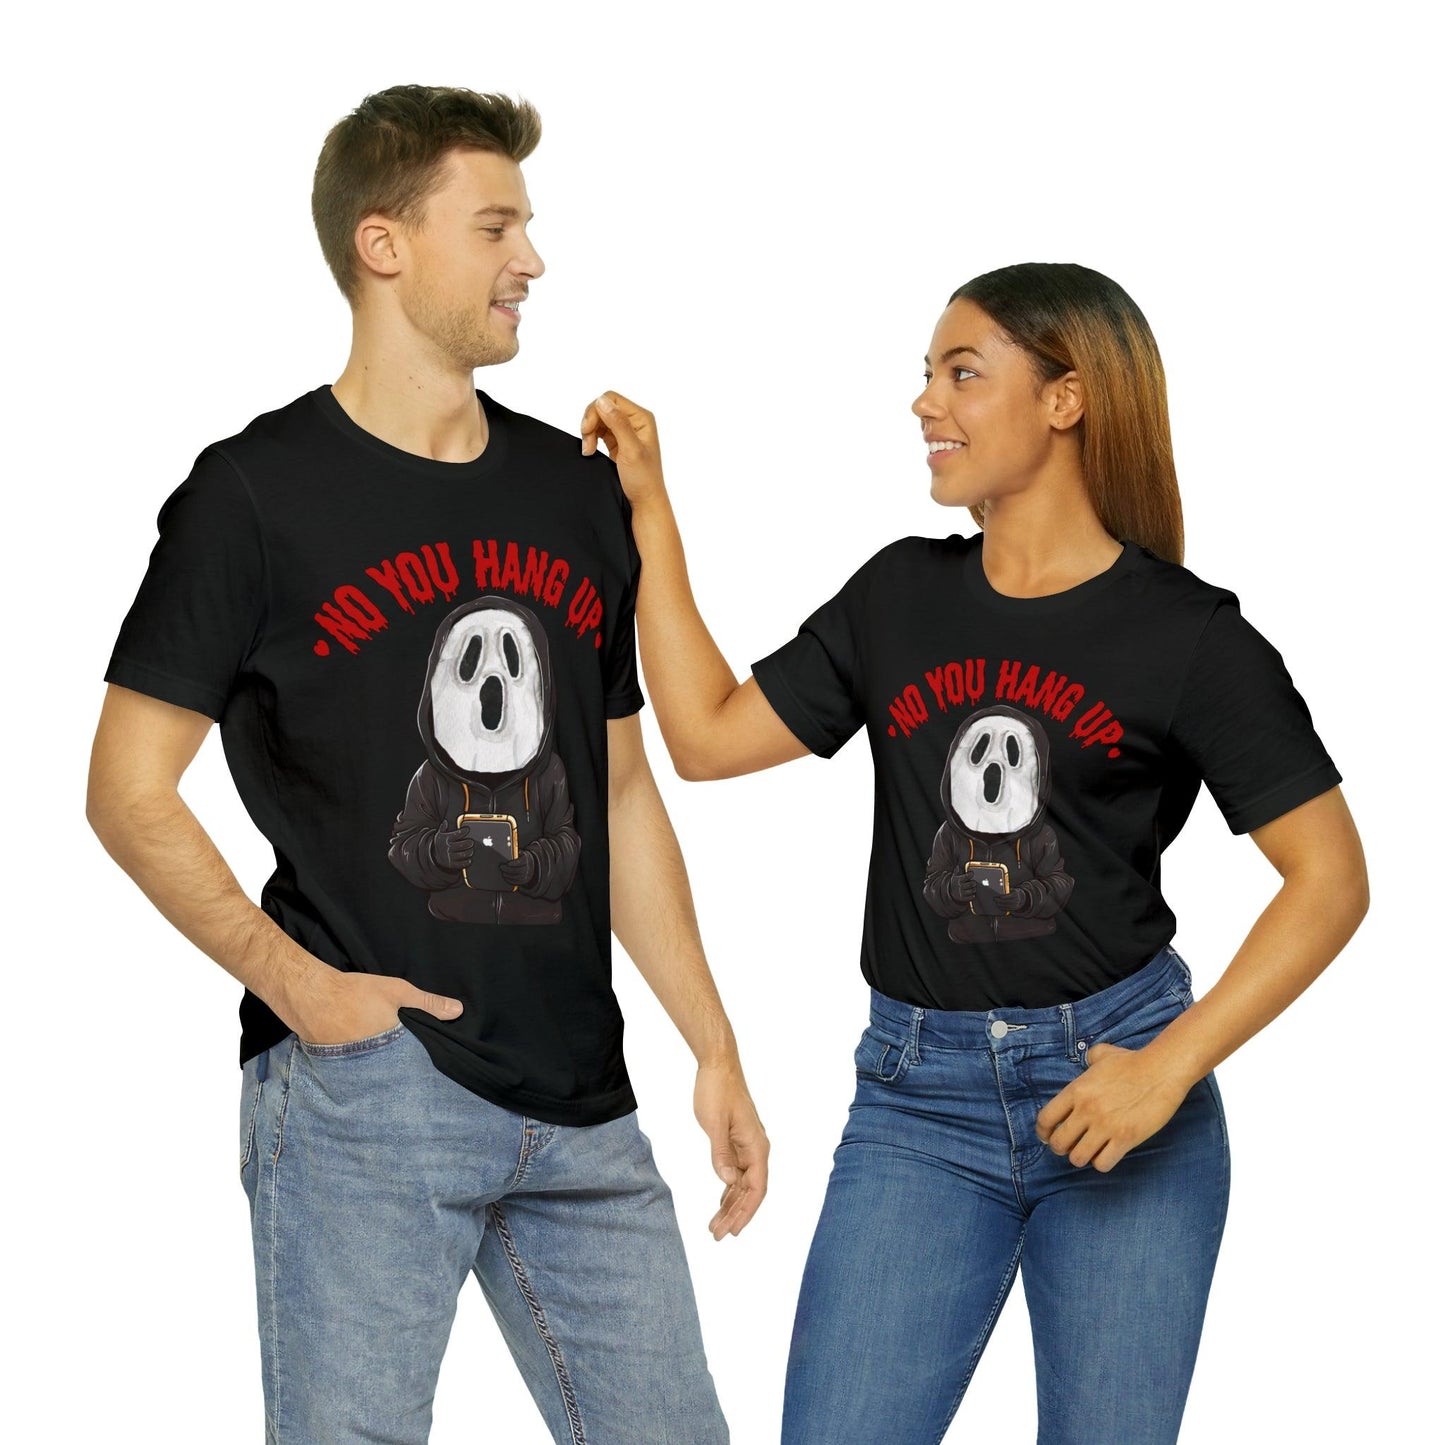 No You Hang Up Scary Halloween Costume Halloween Shirt Playful and Spooky Charm Fall Shirt